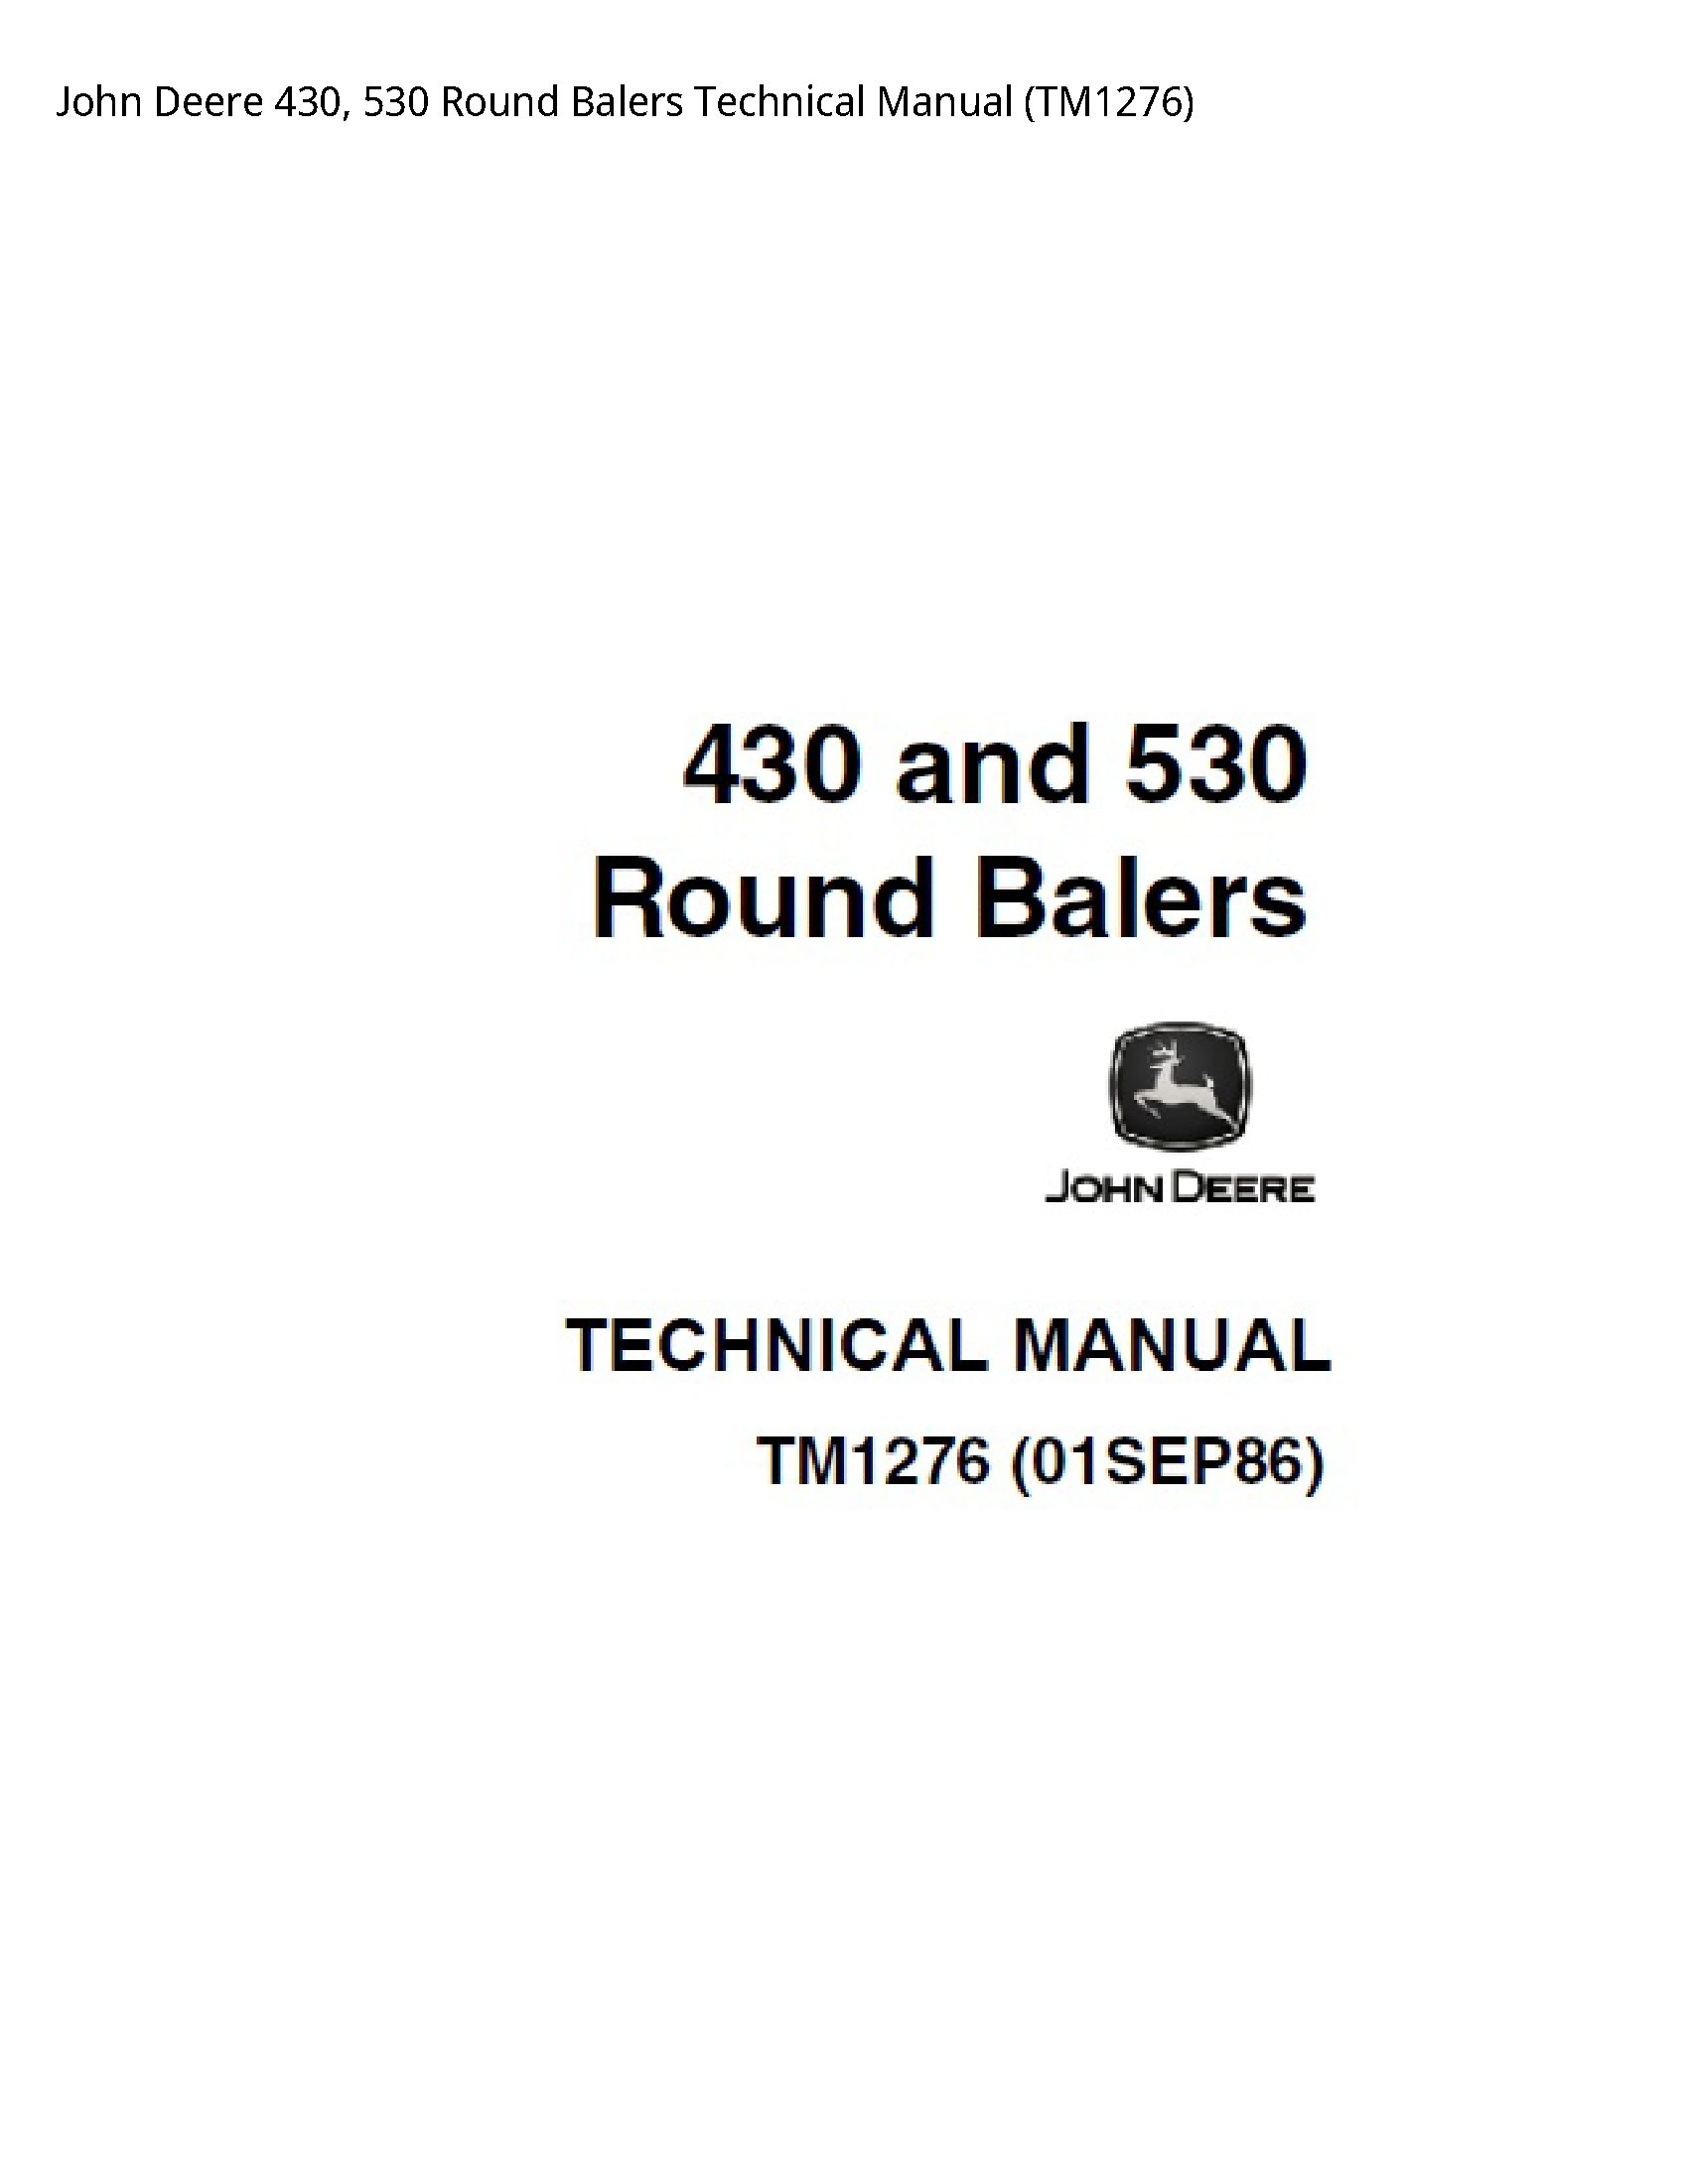 John Deere 430 Round Balers Technical manual